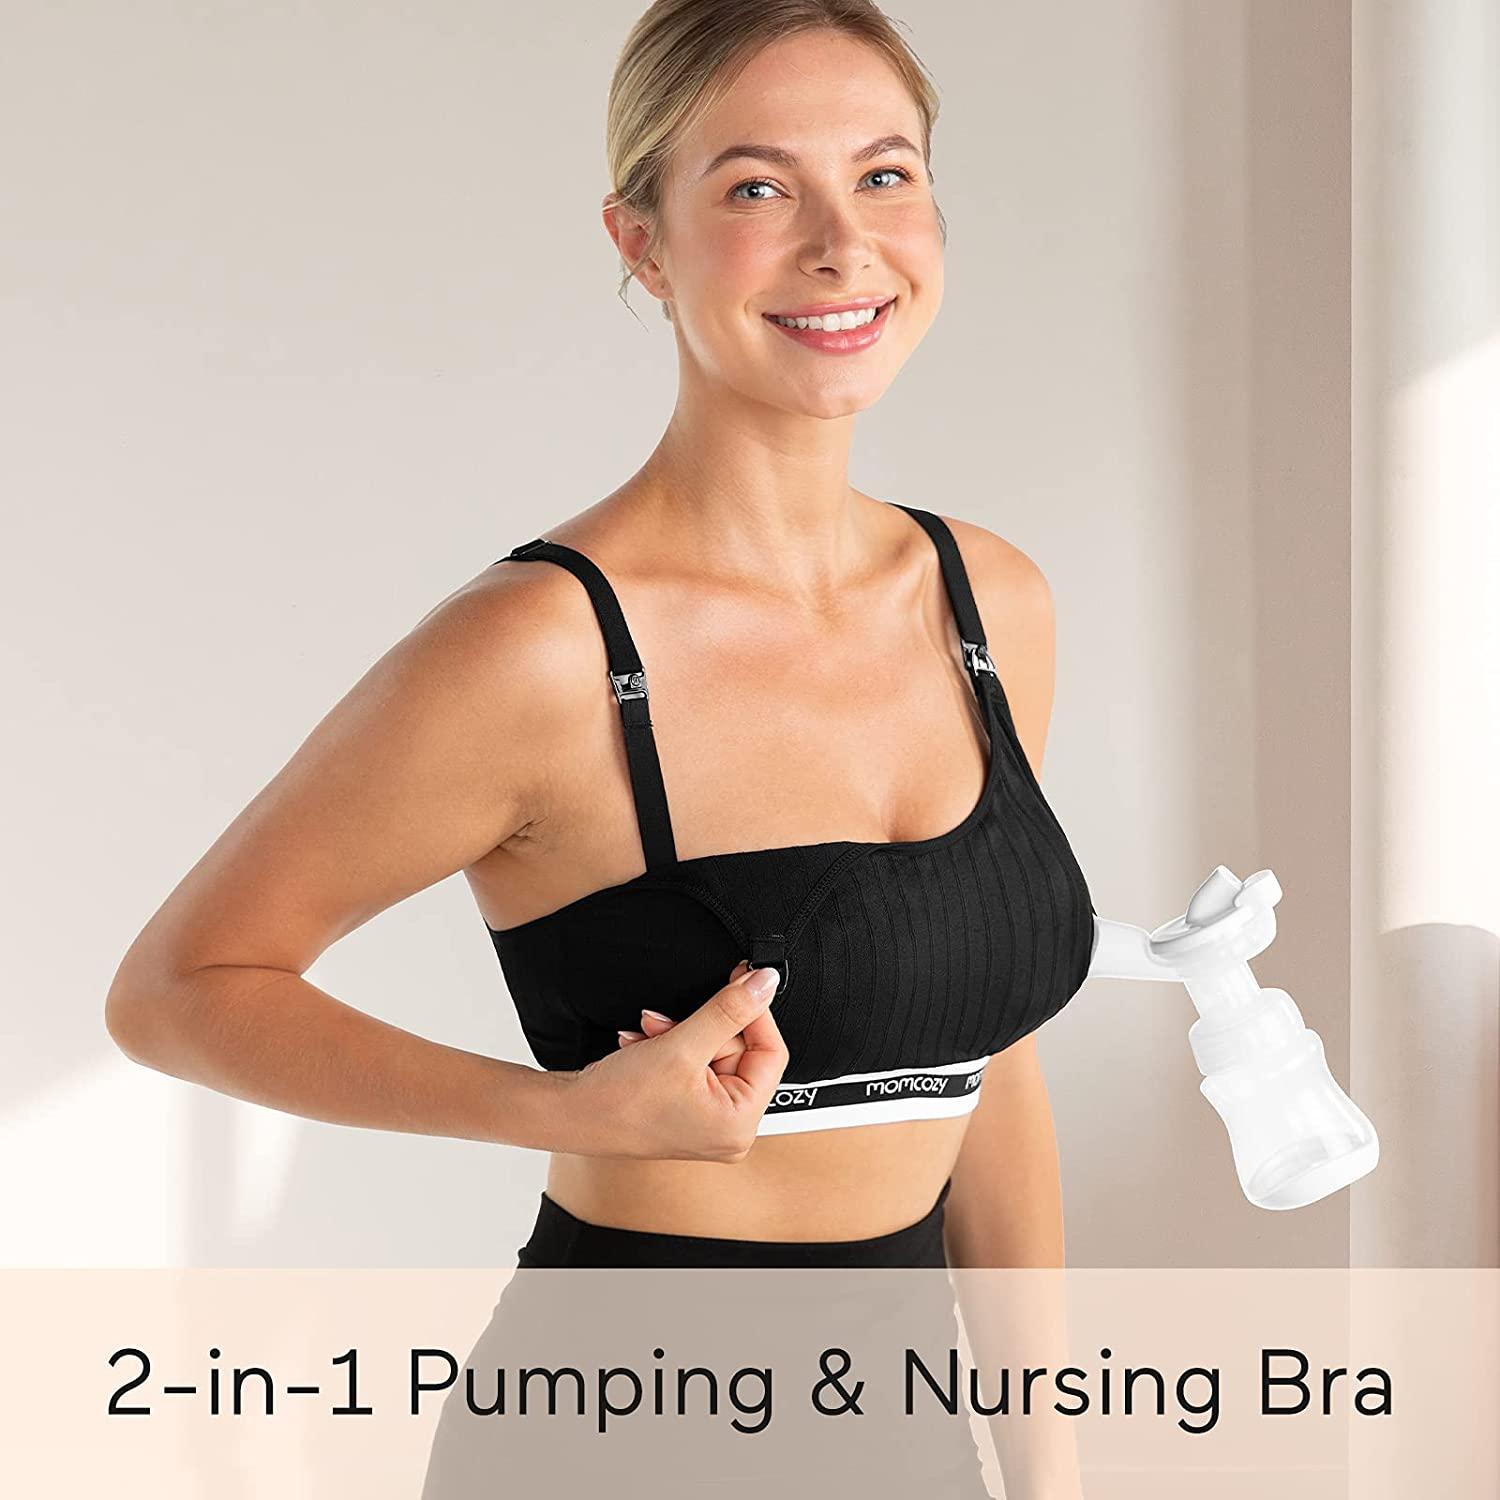 Hands Free Pumping Bra, Breastfeeding Bra, Nursing Bra, Adjustable  Breastfeeding Bra for Holding Breast Pumps Like Medela, Spectra, Lansinoh,  Philips